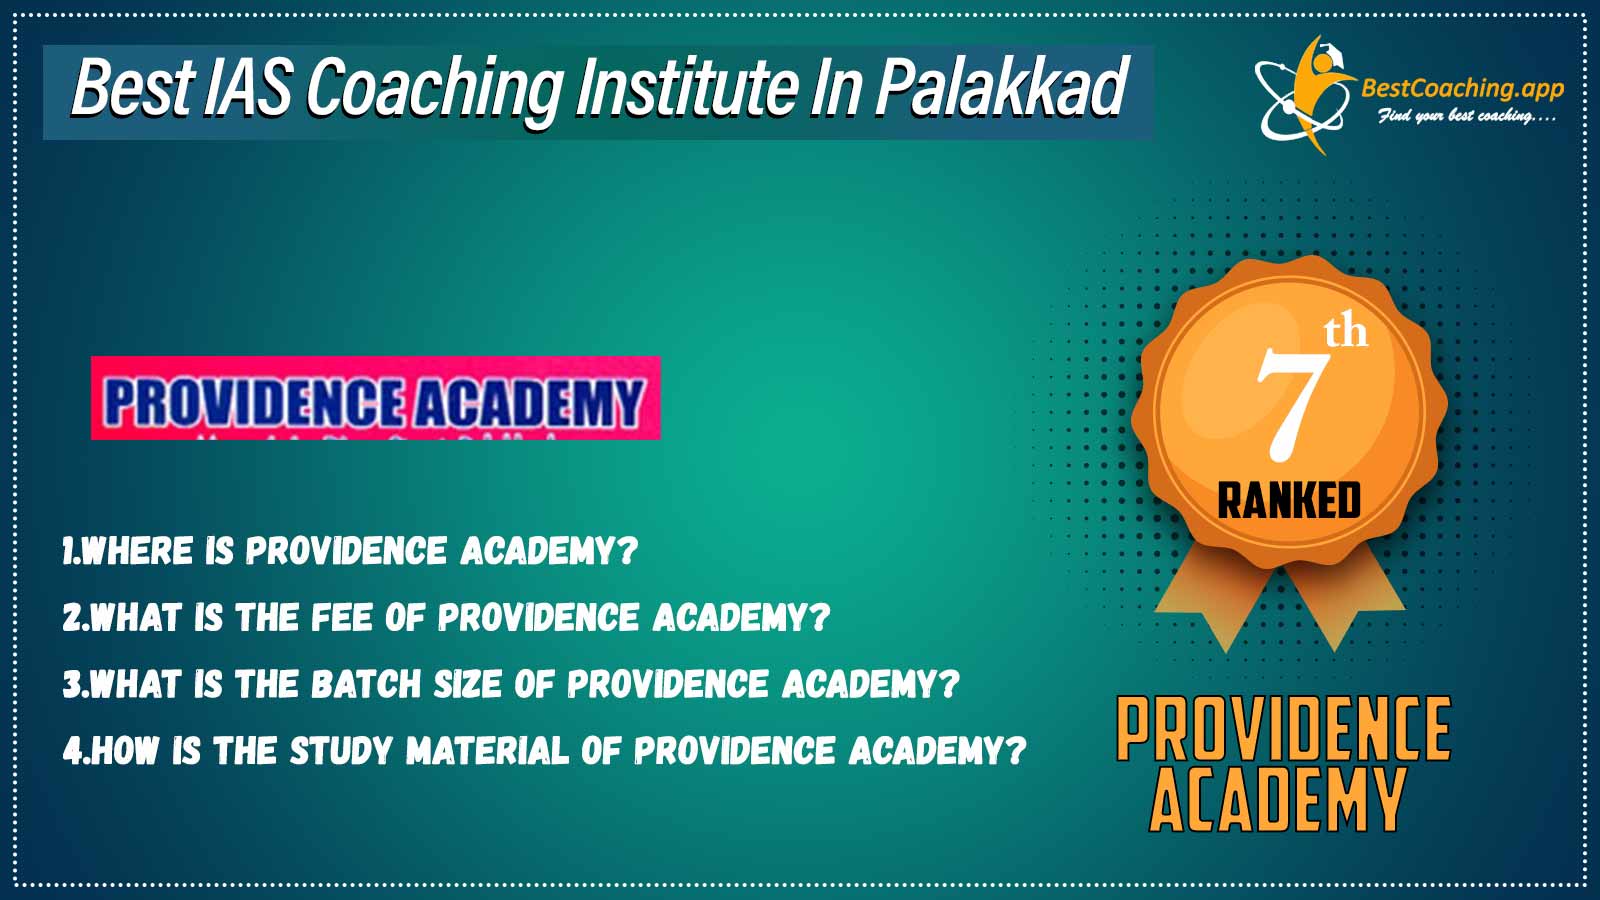 Top IAS Coaching in Palakkad